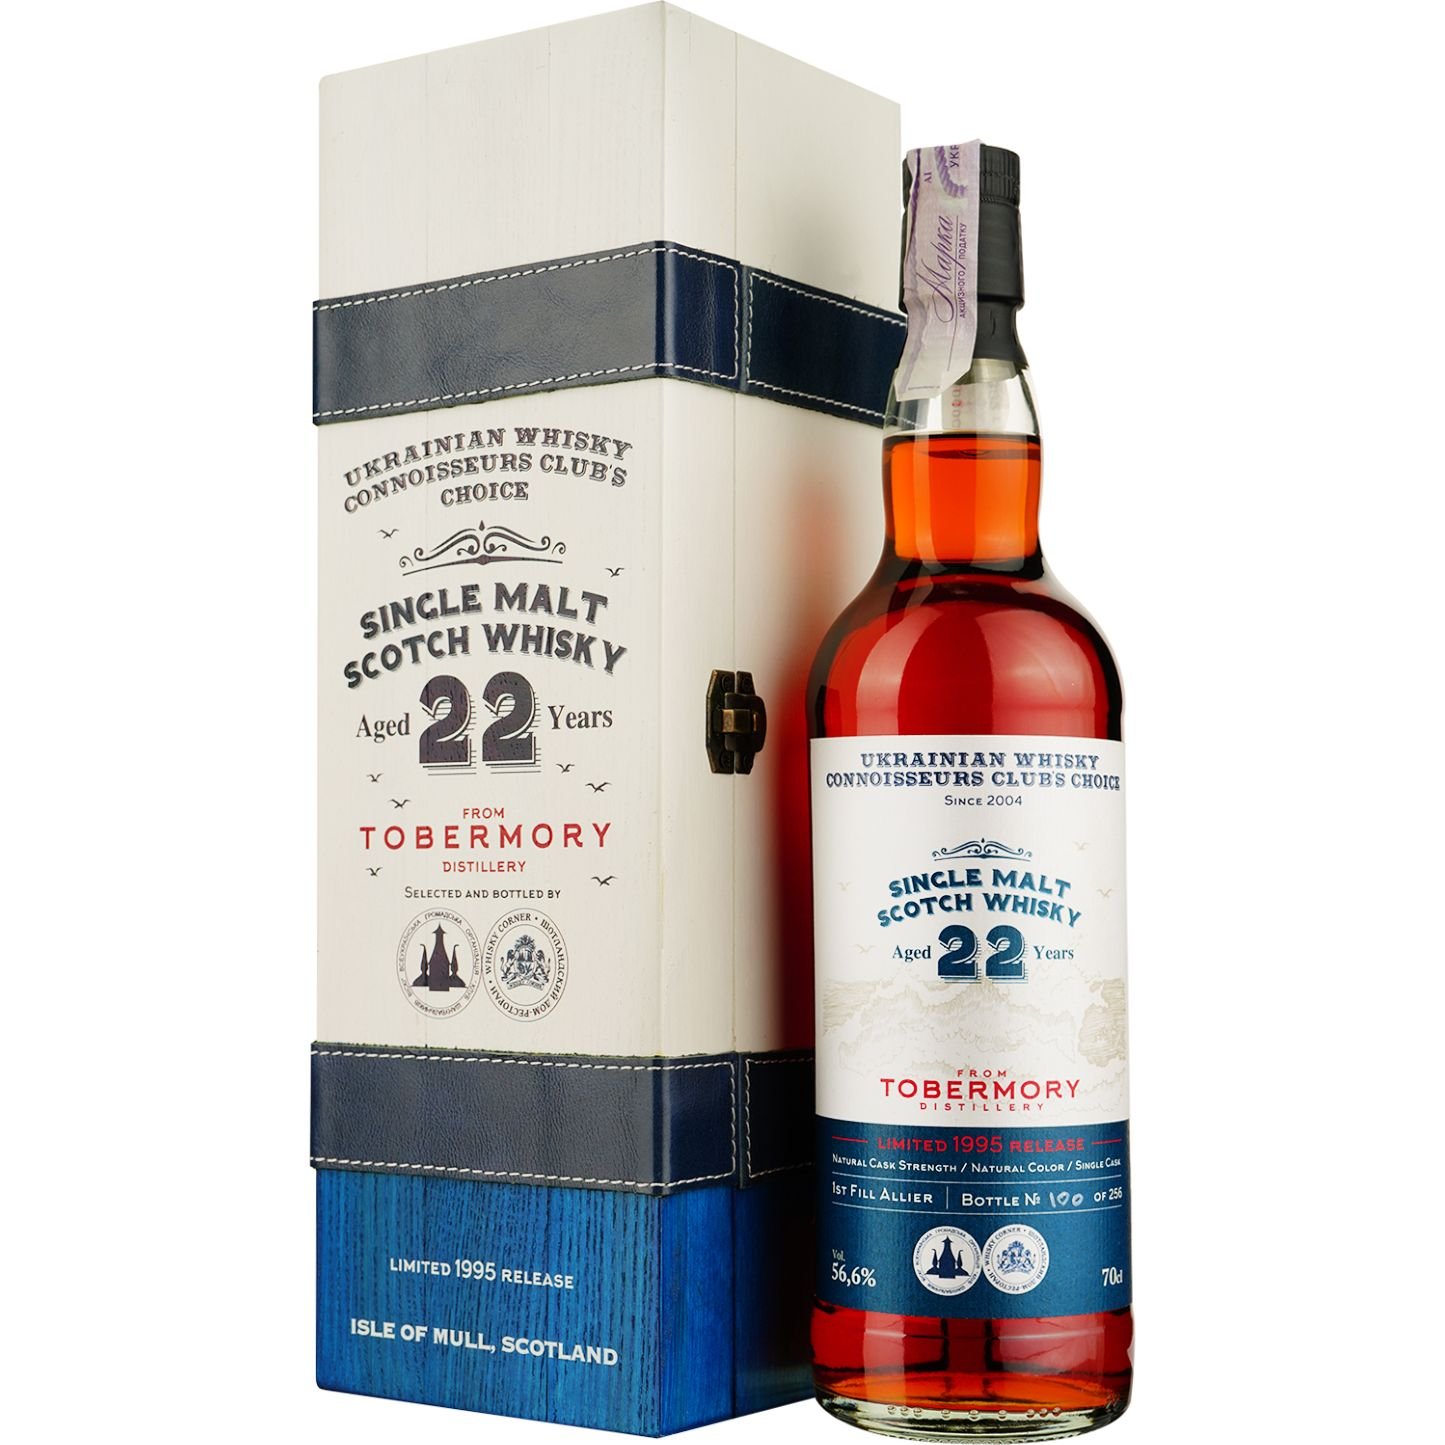 Виски Tobermory 22 Years Old 1st Fill Allier Single Malt Scotch Whisky, в подарочной упаковке, 56,6%, 0,7 л - фото 1